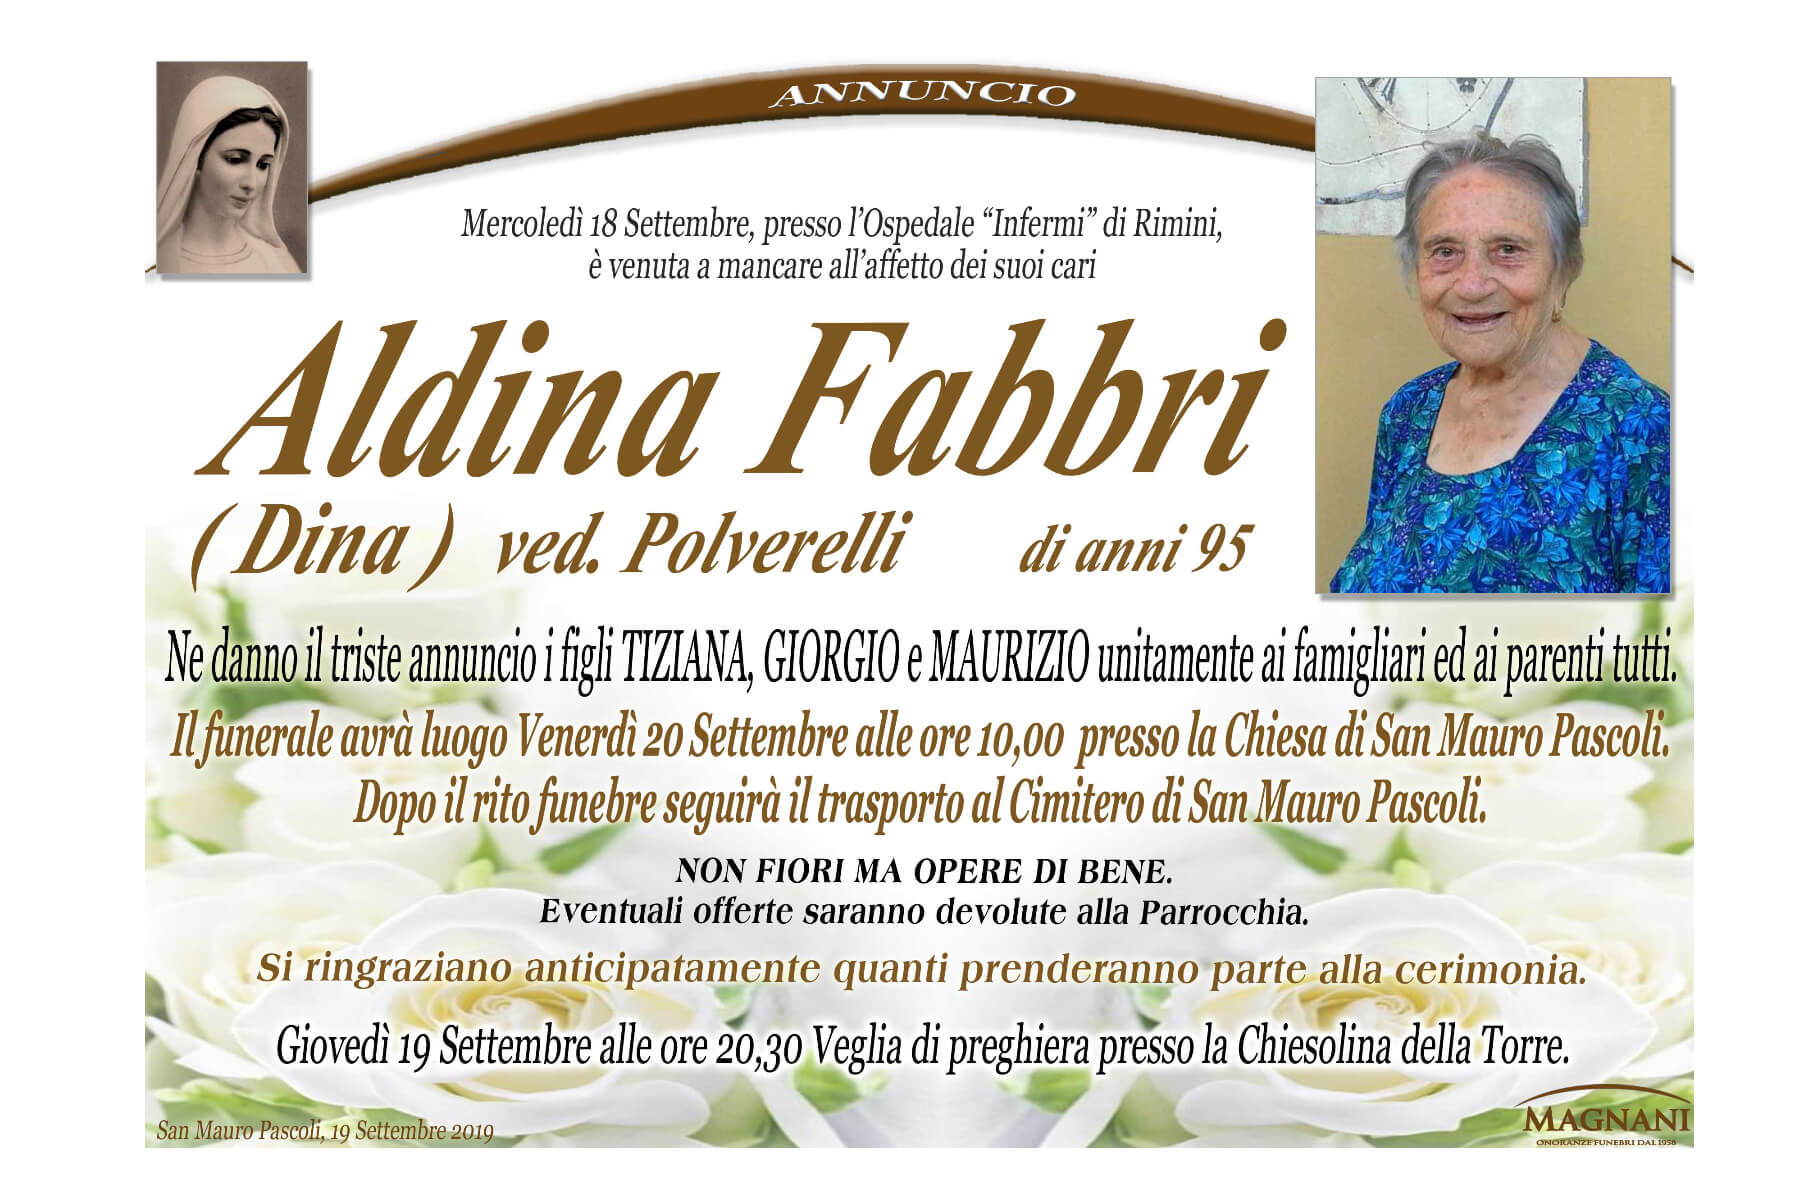 Aldina Fabbri